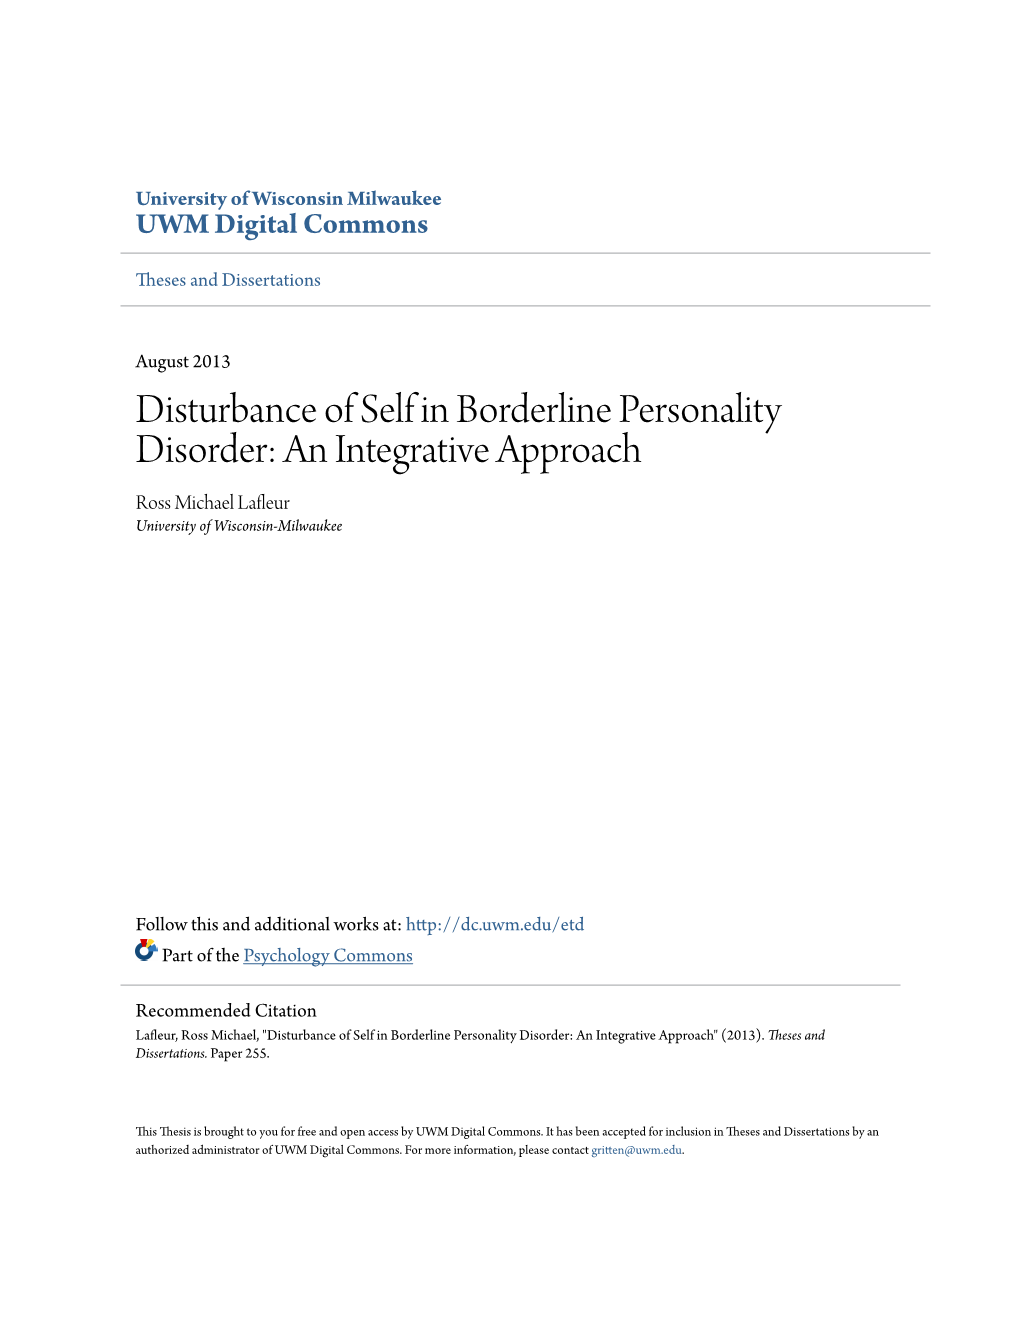 Disturbance of Self in Borderline Personality Disorder: an Integrative Approach Ross Michael Lafleur University of Wisconsin-Milwaukee